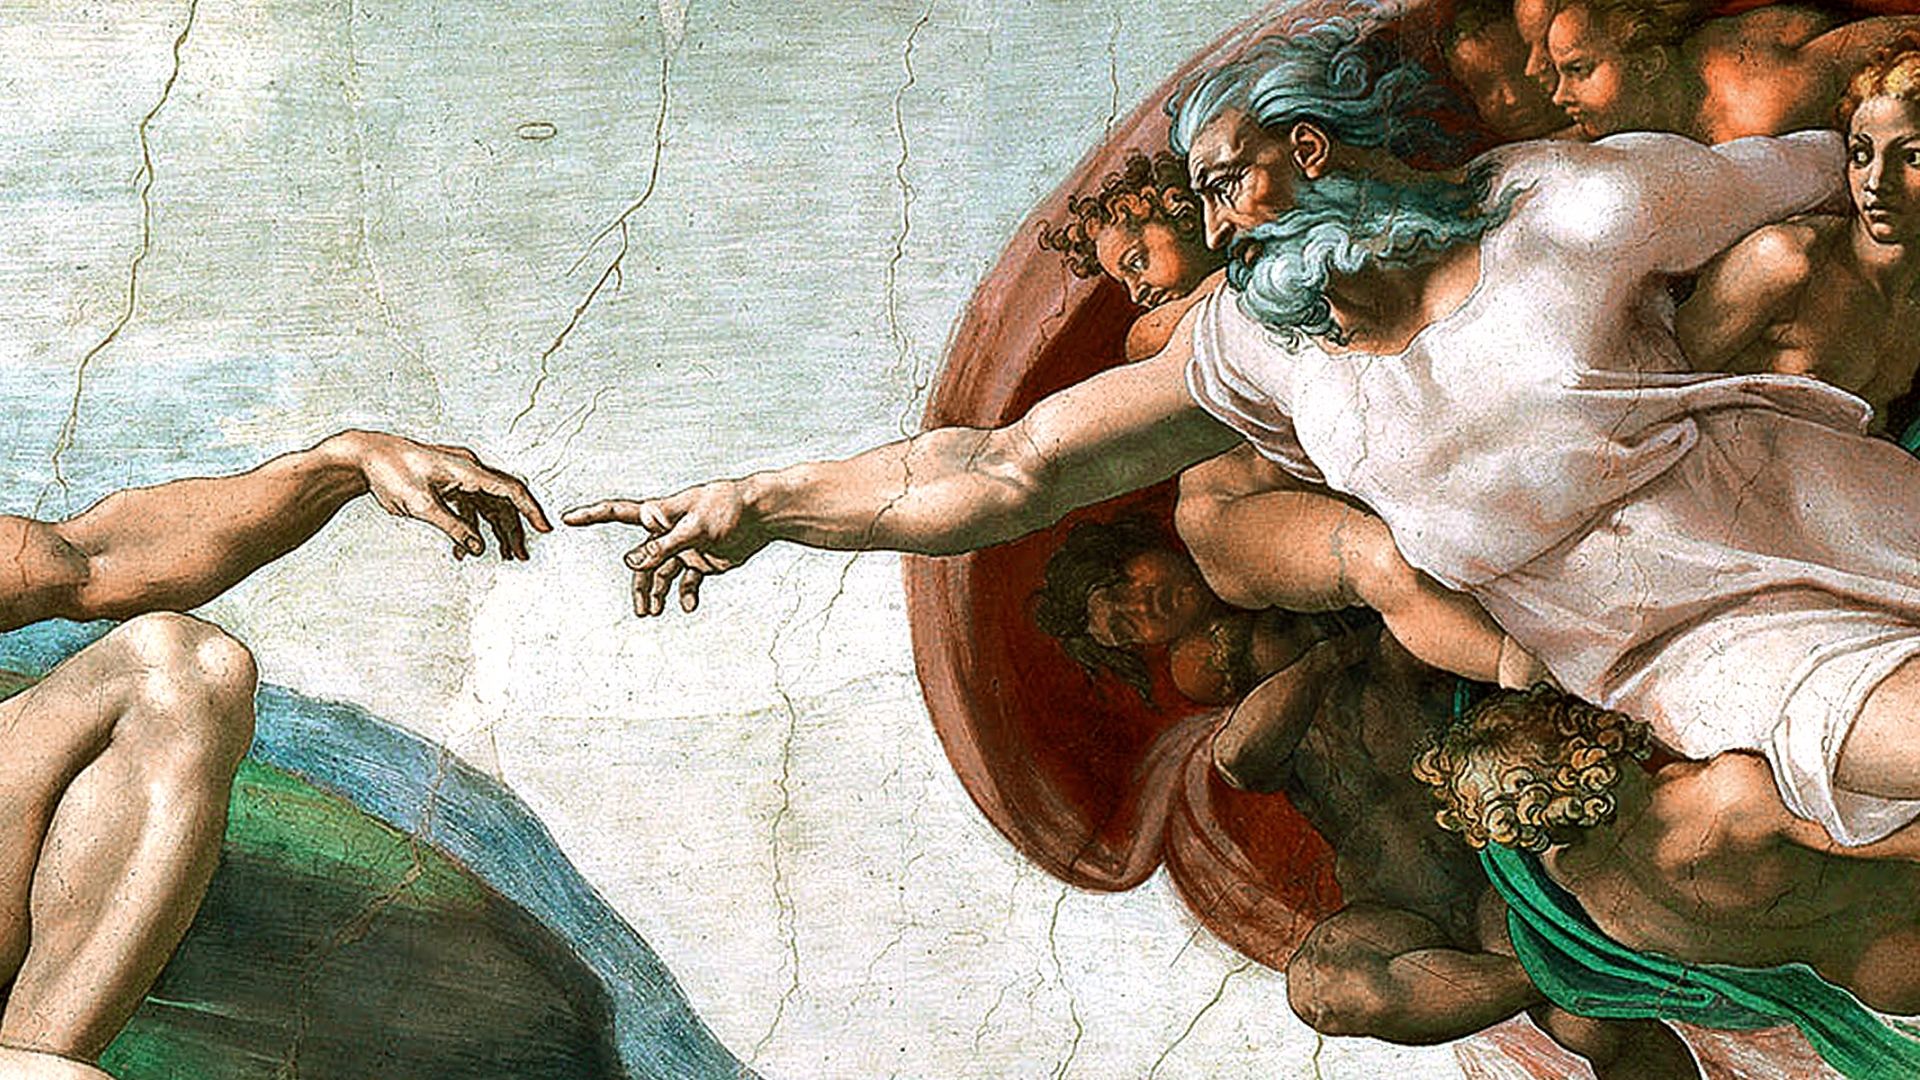 Free download paintings Michelangelo The Creation of Adam Sistine